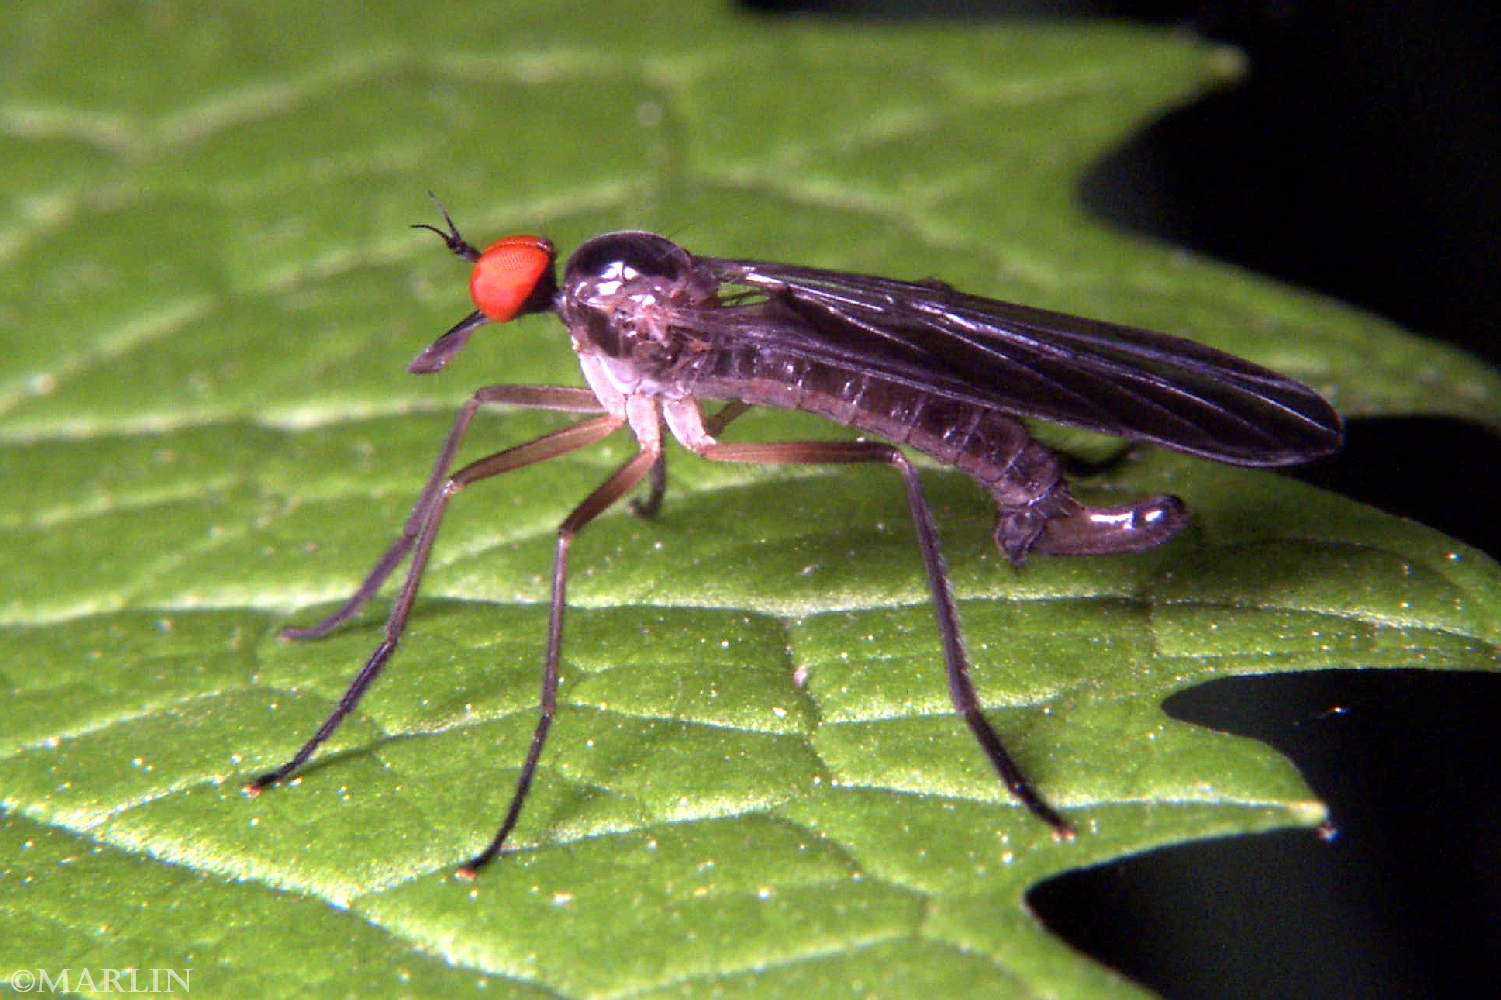 Long-Tailed Dance Fly - Rhamphomyia longicauda